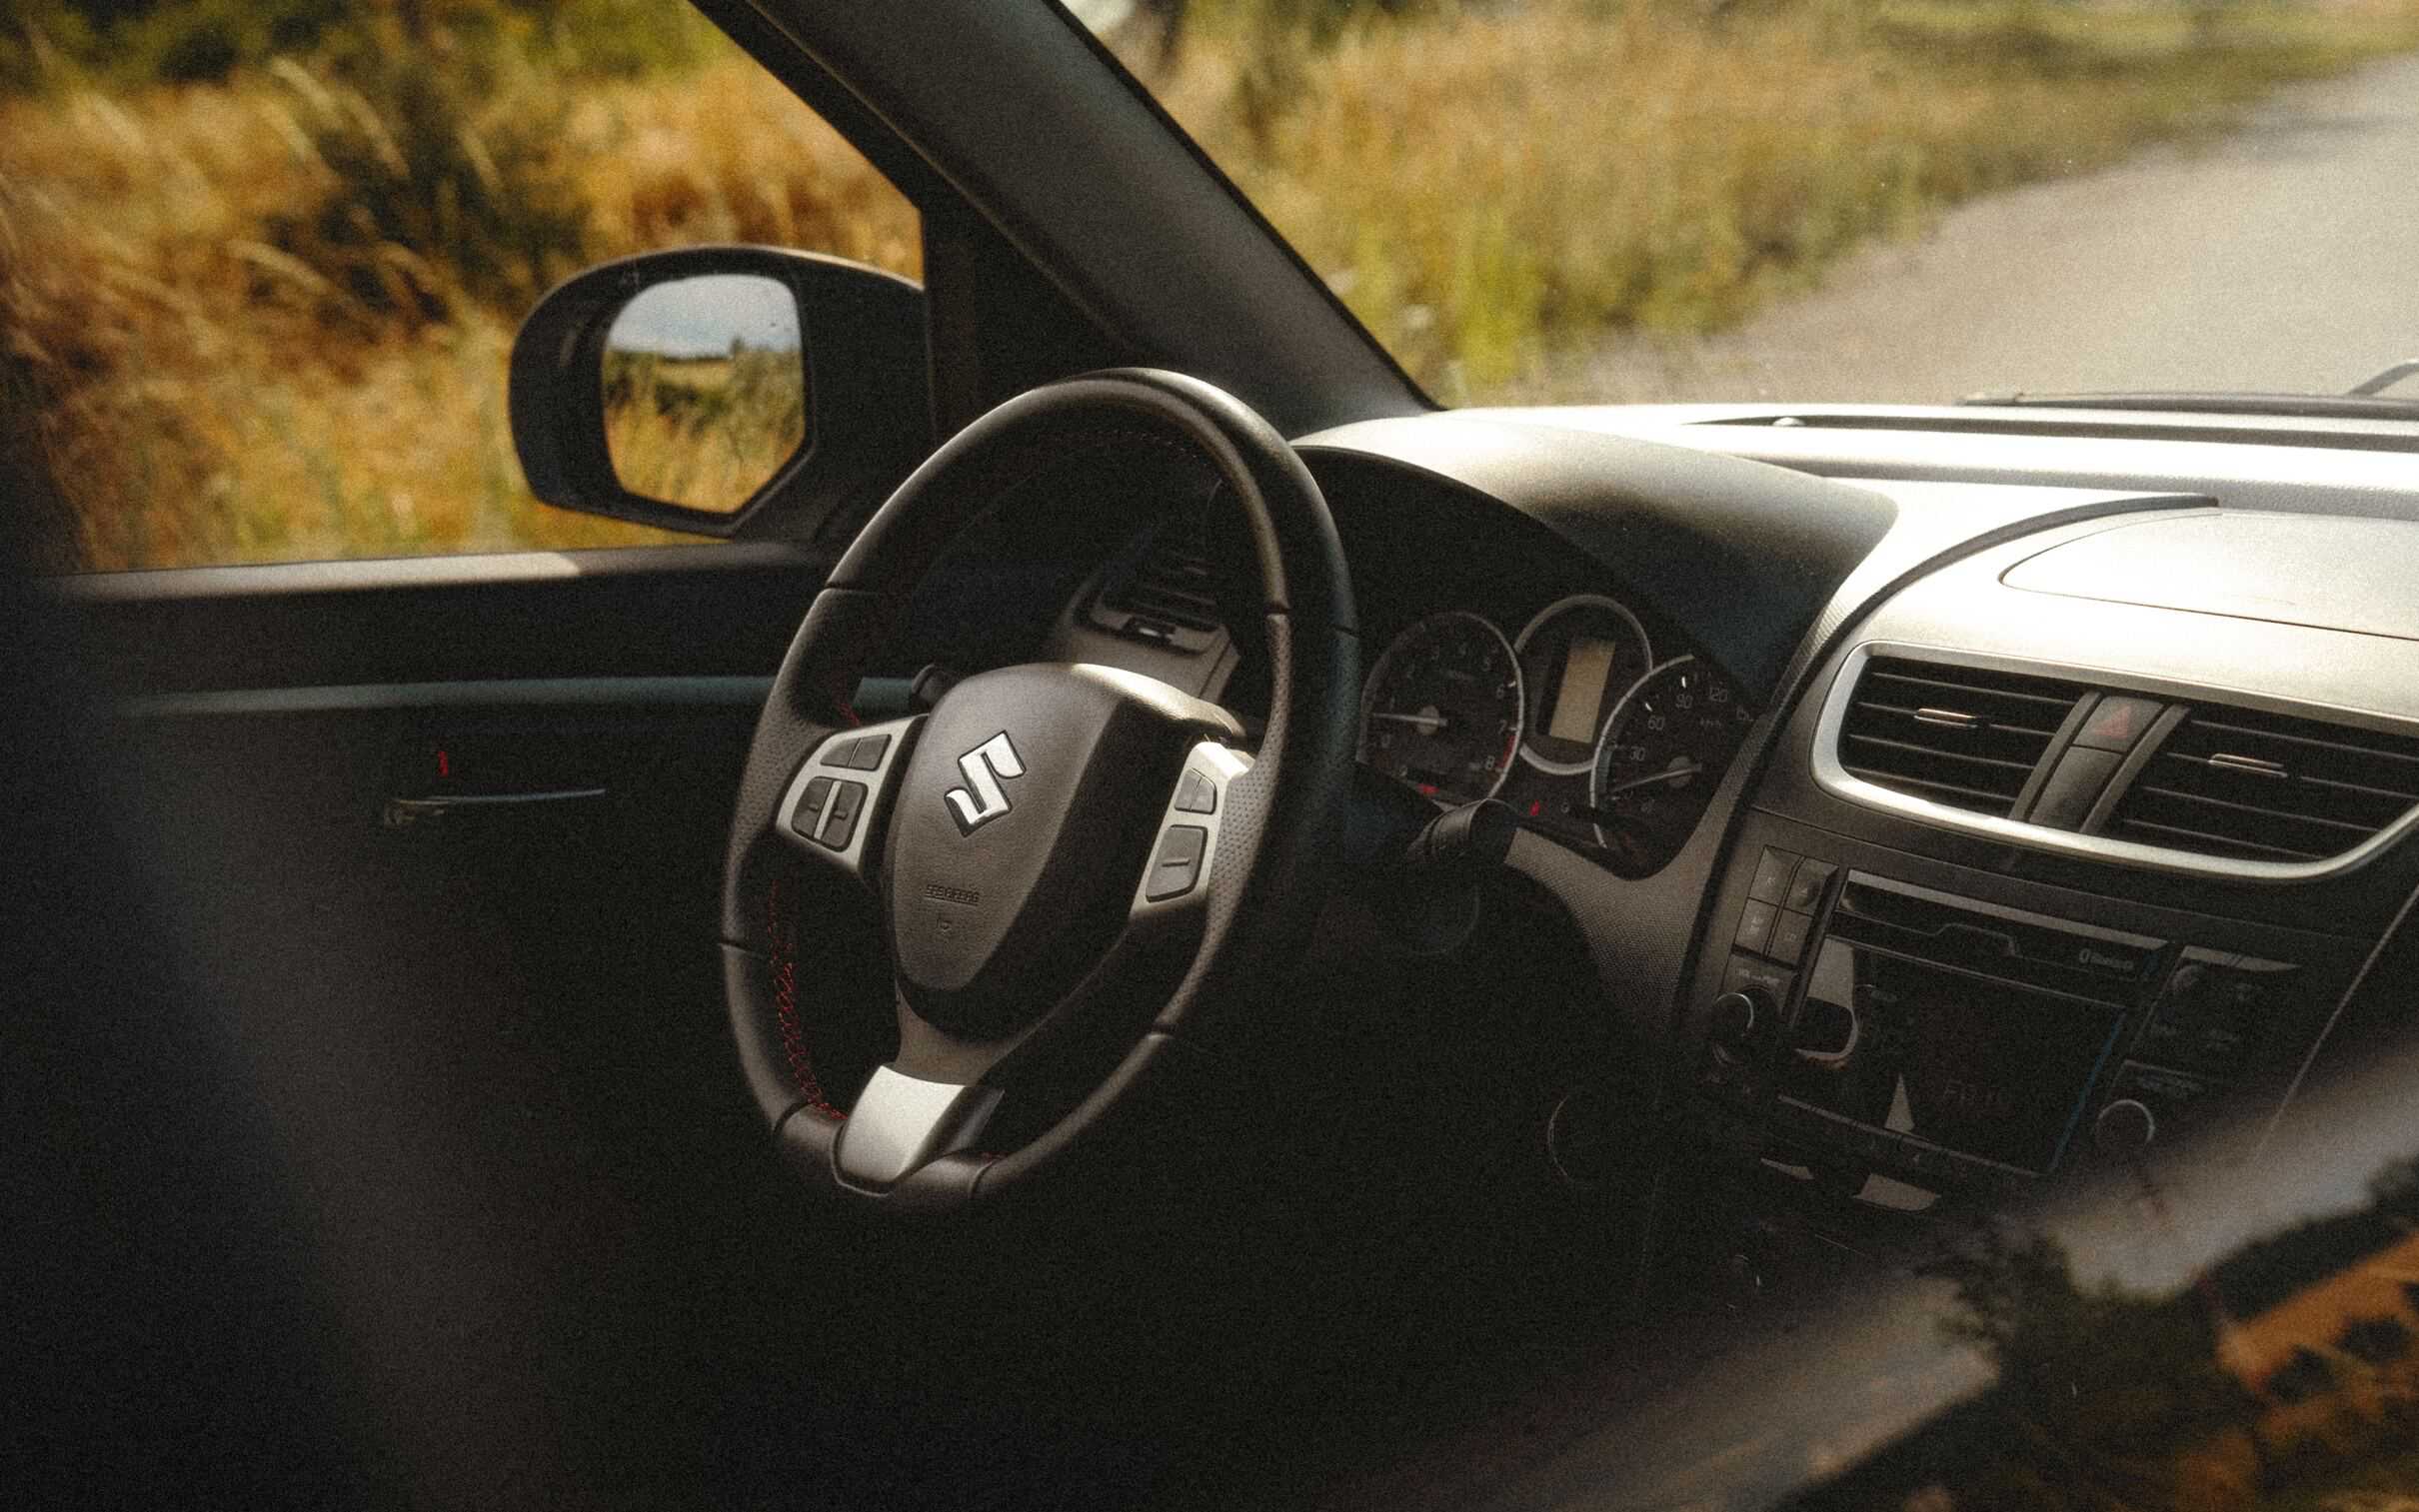 The interior of a Suzuki Swift, showcasing modern design and comfort features.

